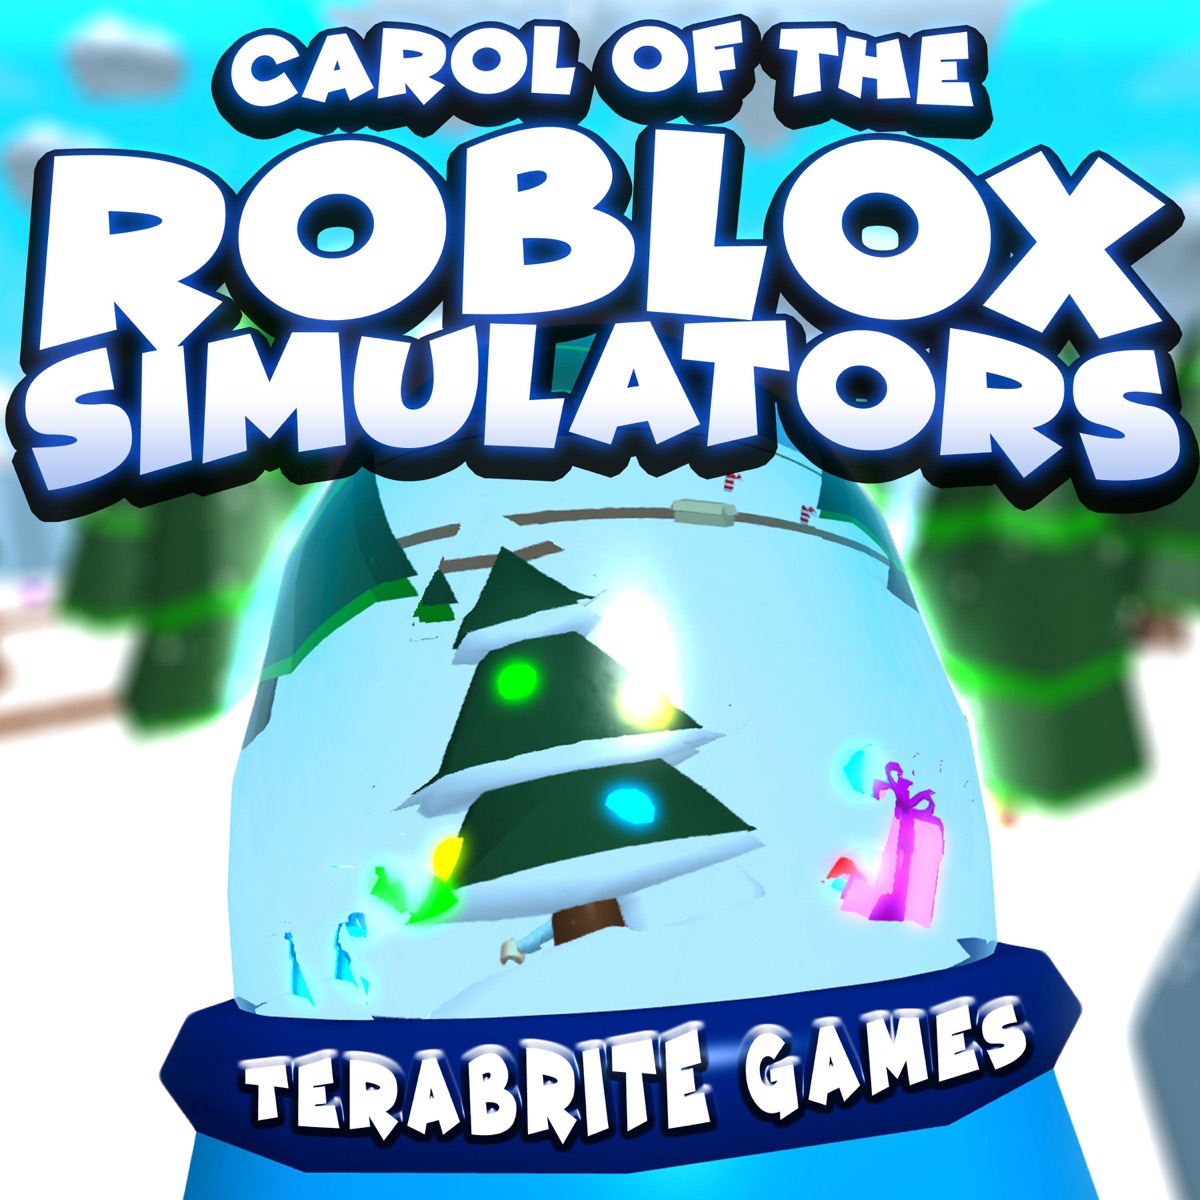 Carol Of The Roblox Simulators Terabrite Games Lyrics Ratings And Reviews - roblox song id smooth jazz